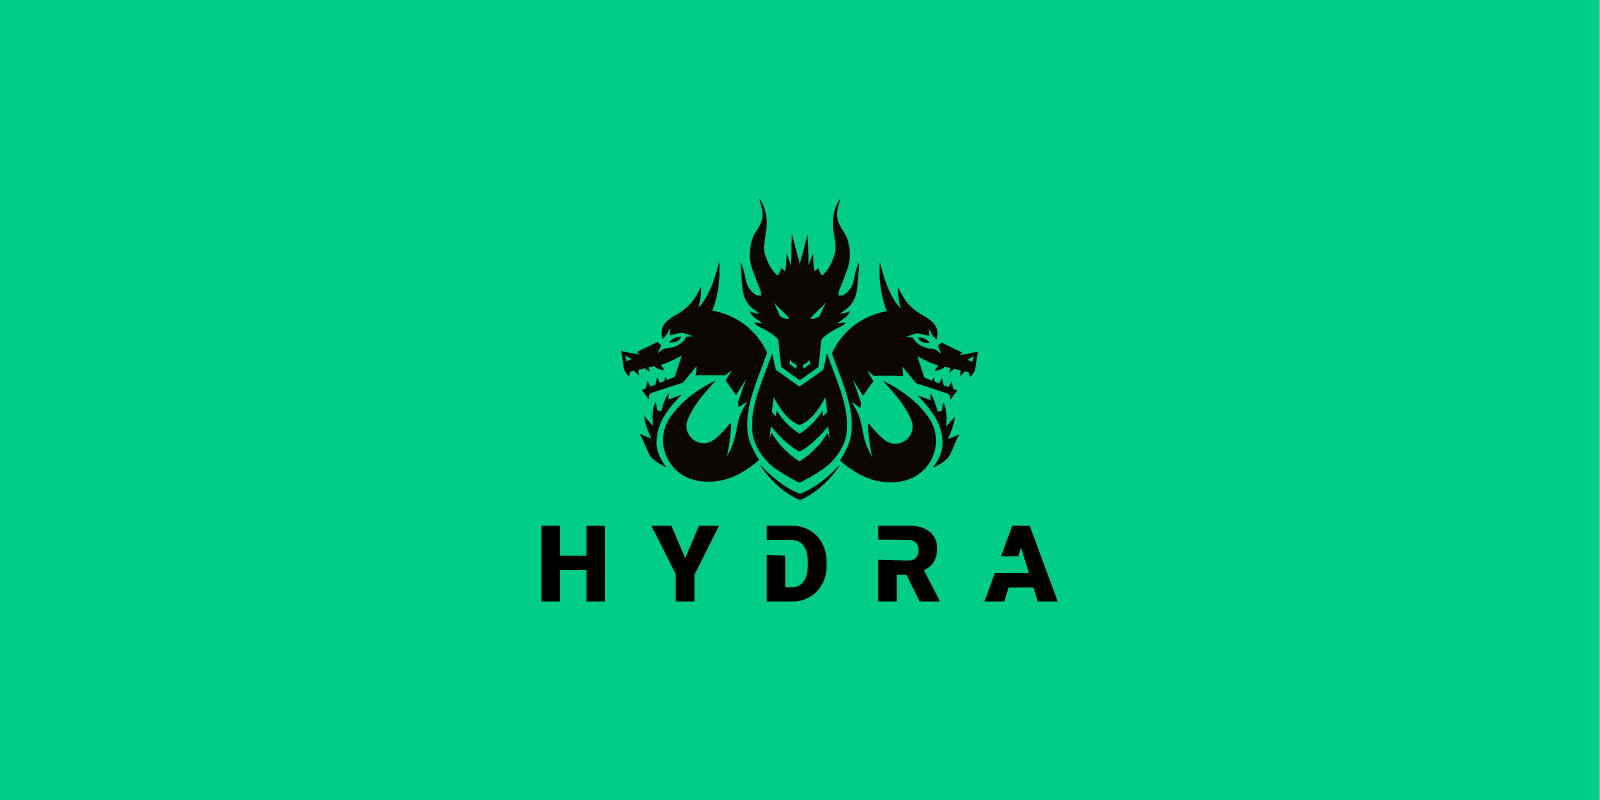 ArtStation - Hydra Logo For Sale